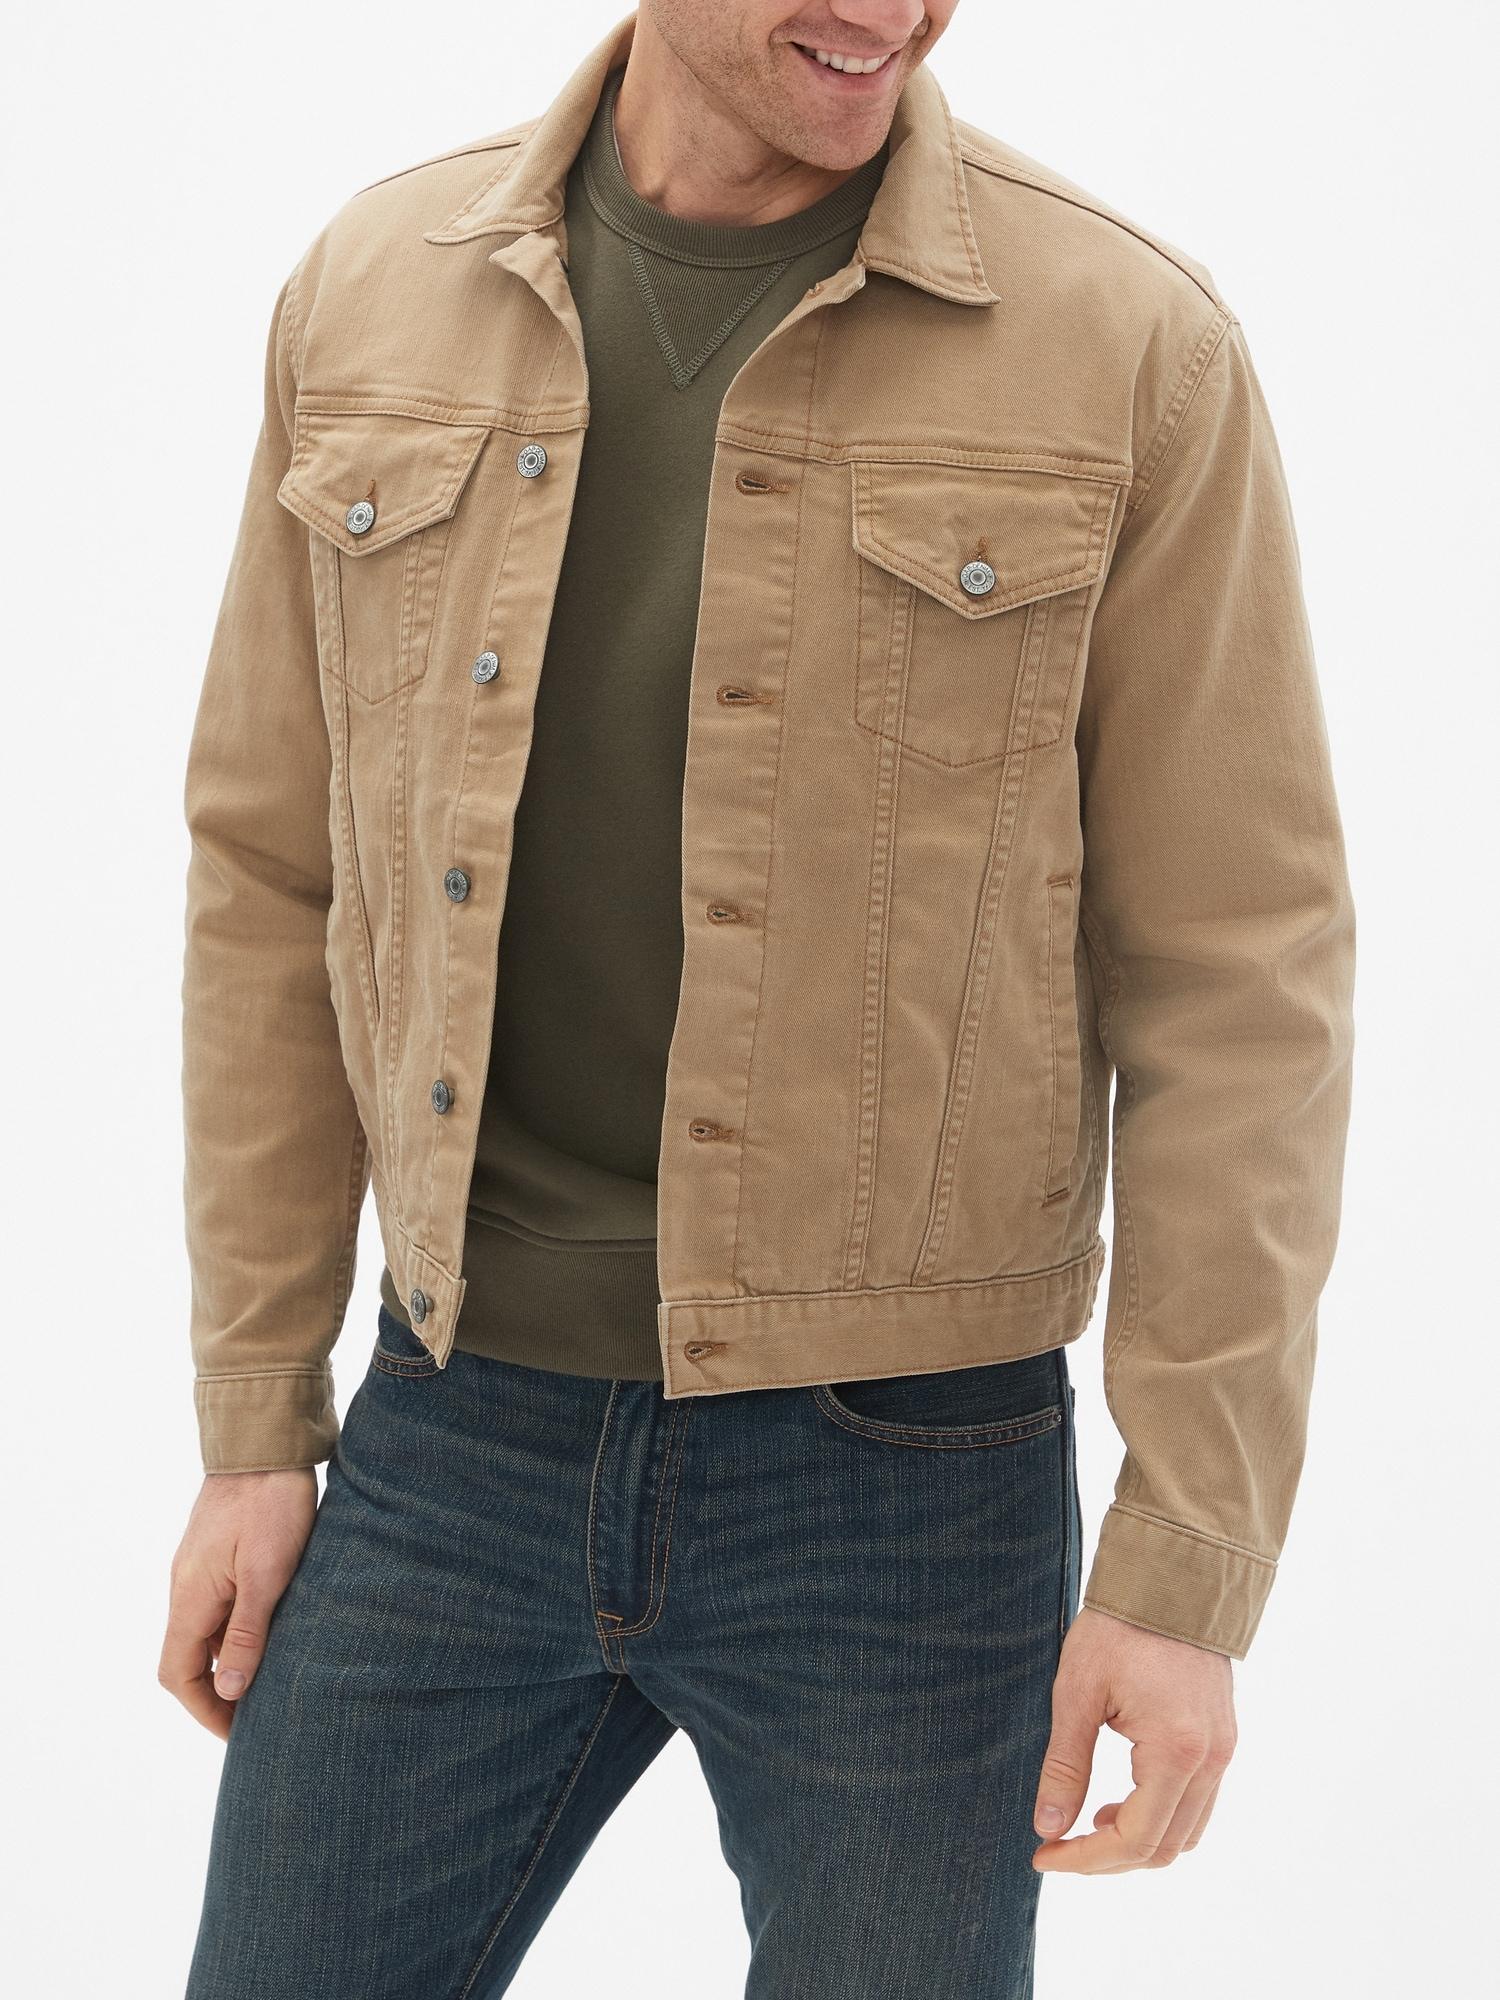 GAP Factory Iconic Denim Jacket for Men - Lyst